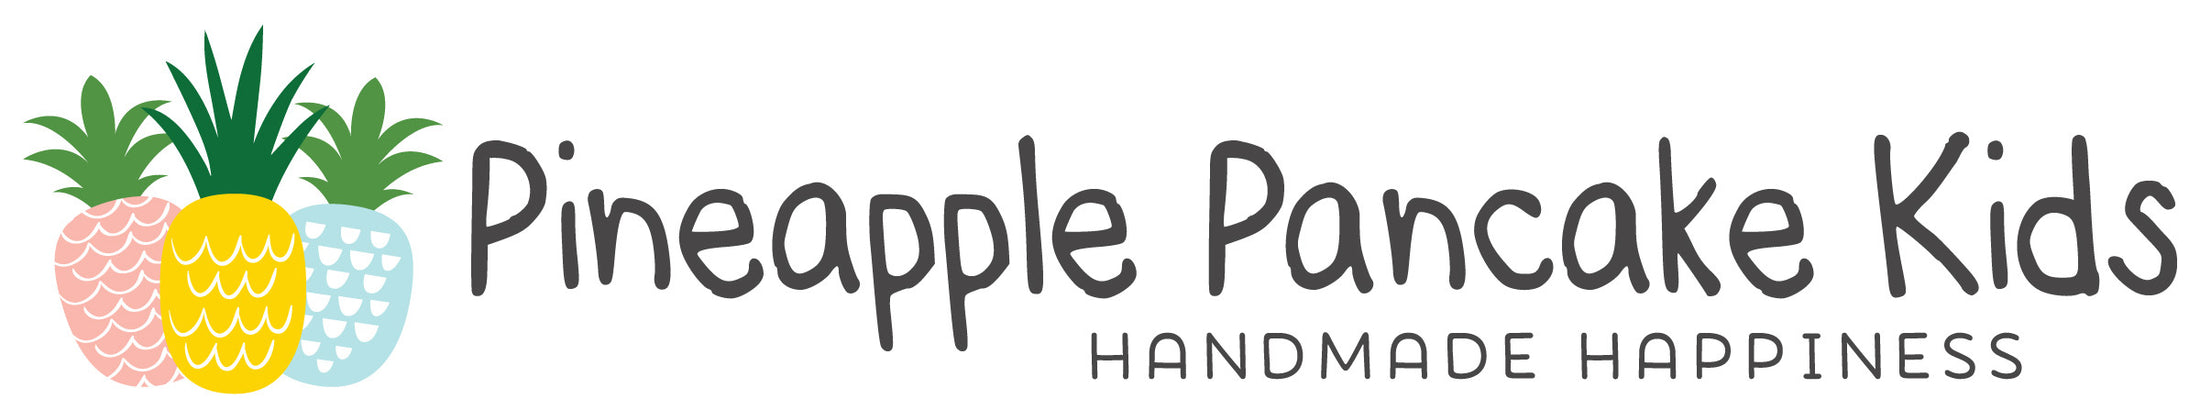 Pineapple Pancake Kids Handmade Happiness - pineapple trio logo